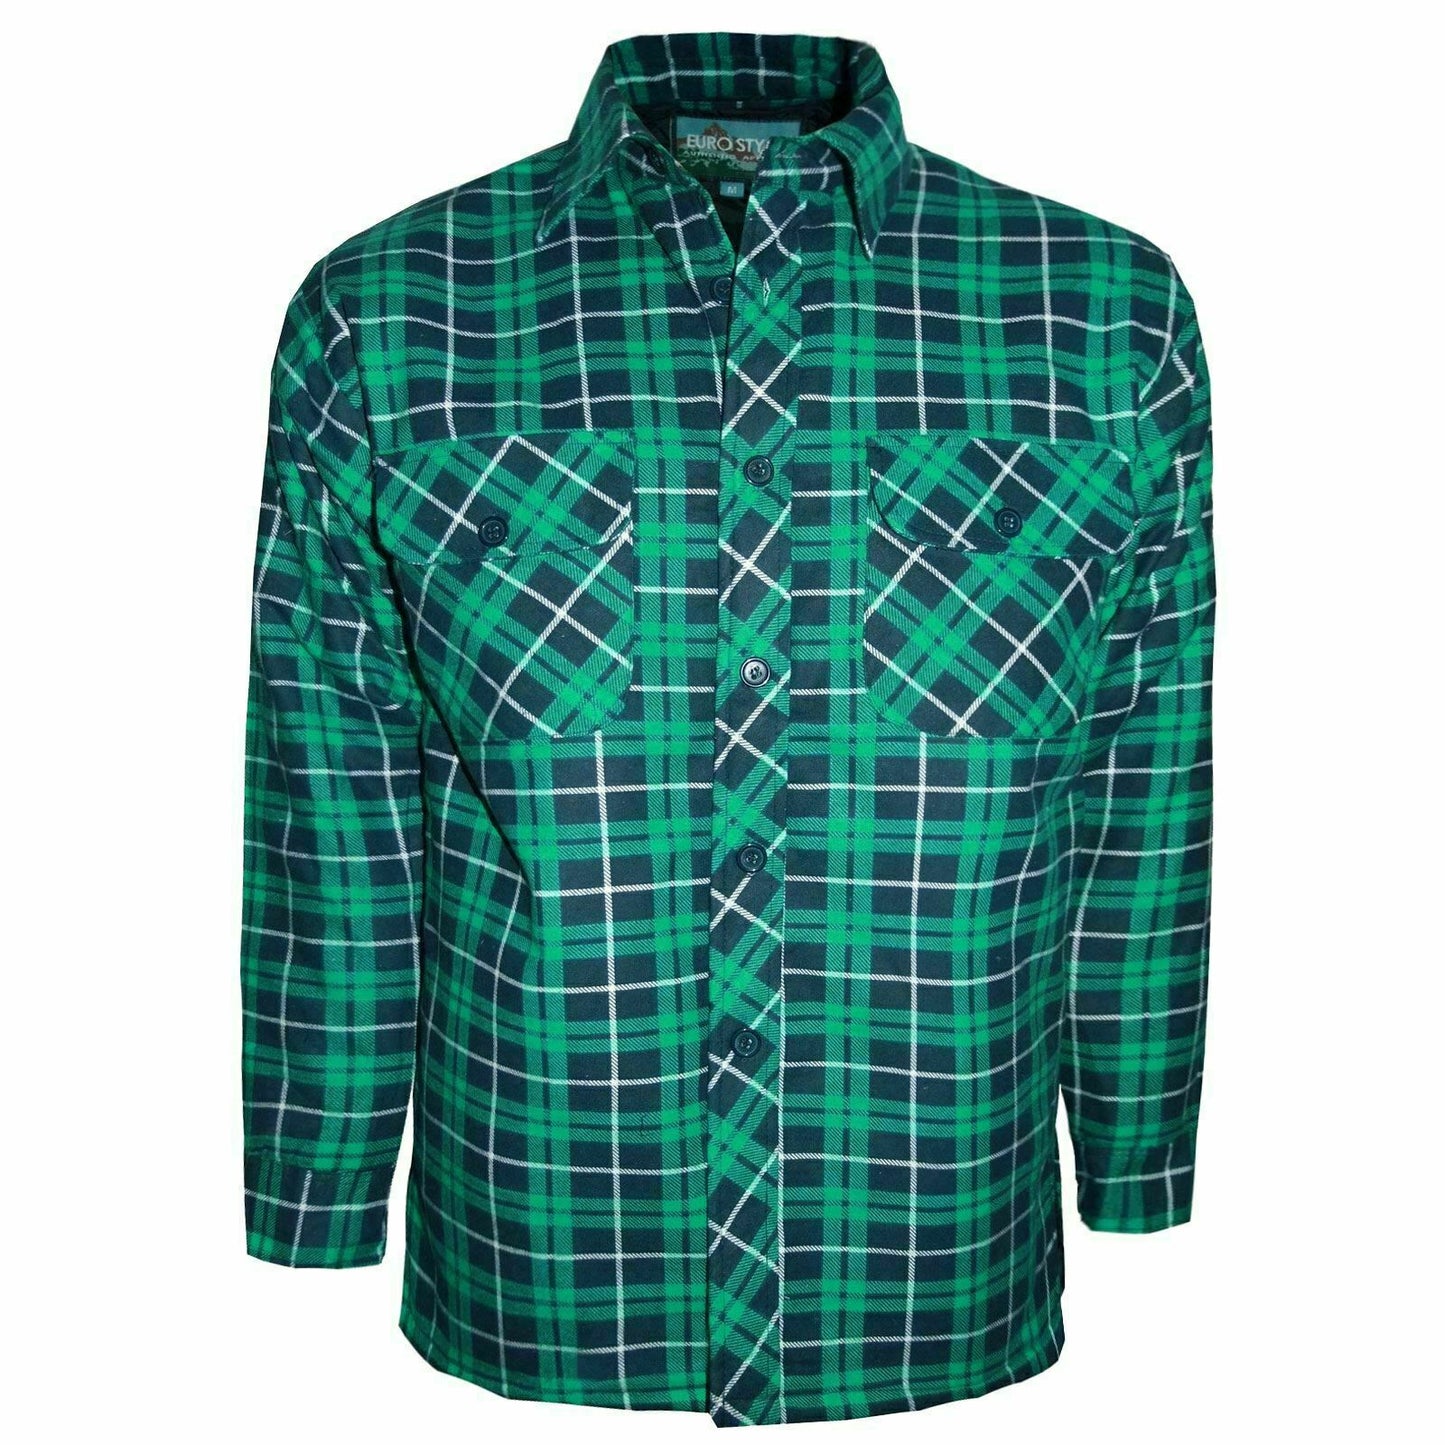 Men's Lumberjack Flannel Shirt In Green Check.